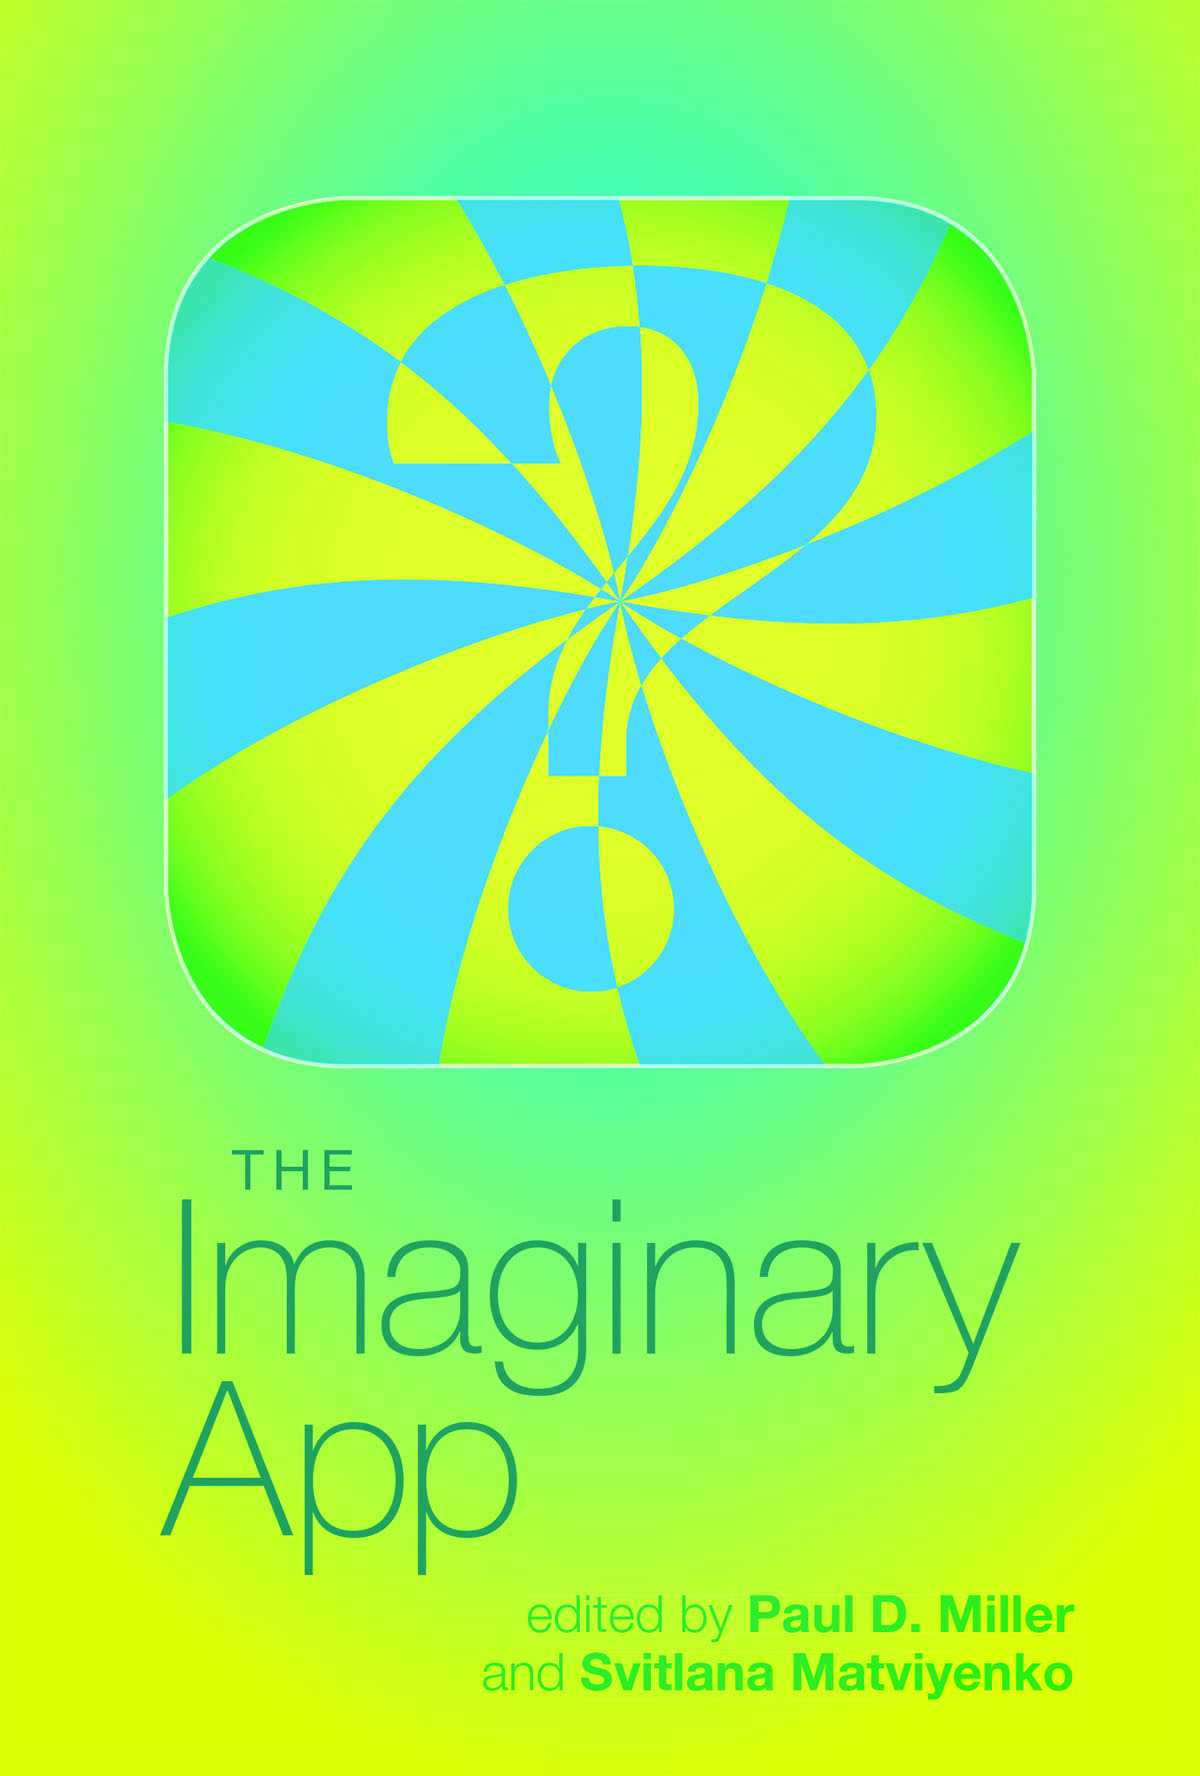 NYC Launch: The Imaginary App by Paul D. Miller (aka DJ Spooky) & Svitlana Matviyenko